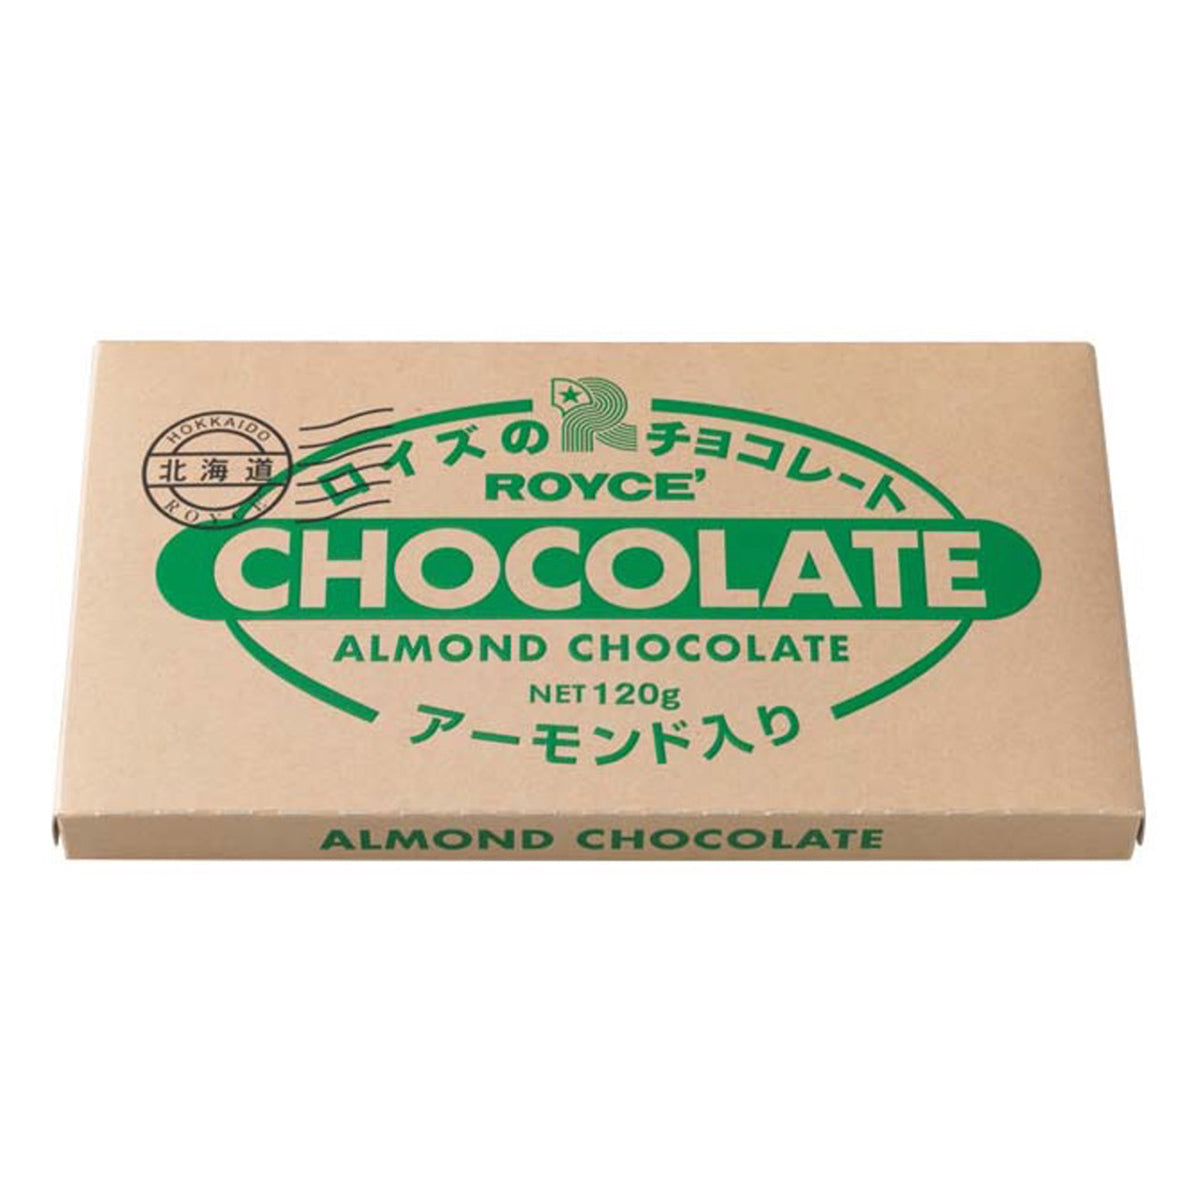 ROYCE' Chocolate Bar Selection